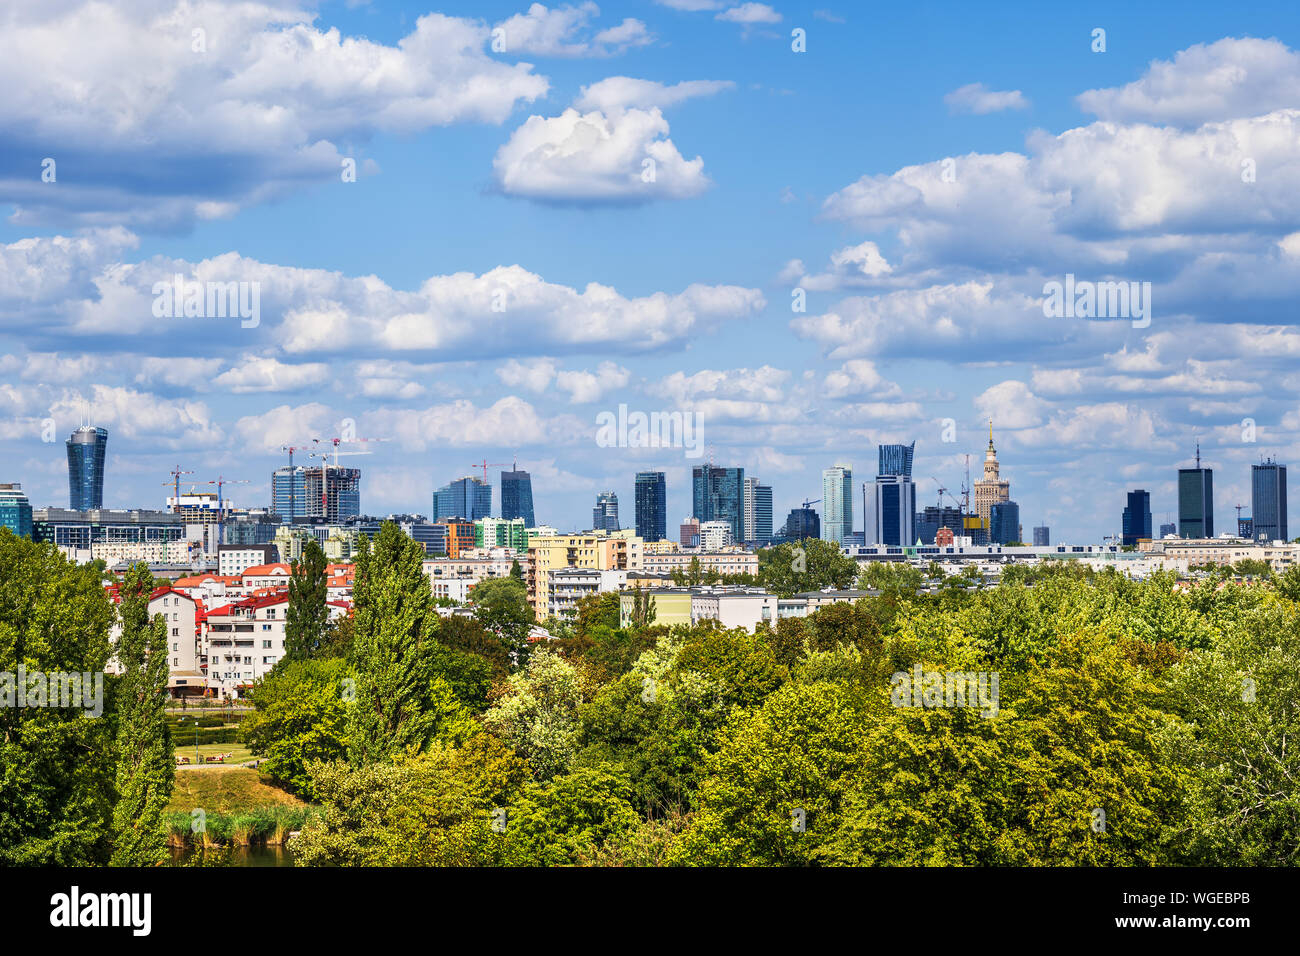 Warsaw skyline, capital city of Poland, view above park trees Stock Photo -  Alamy